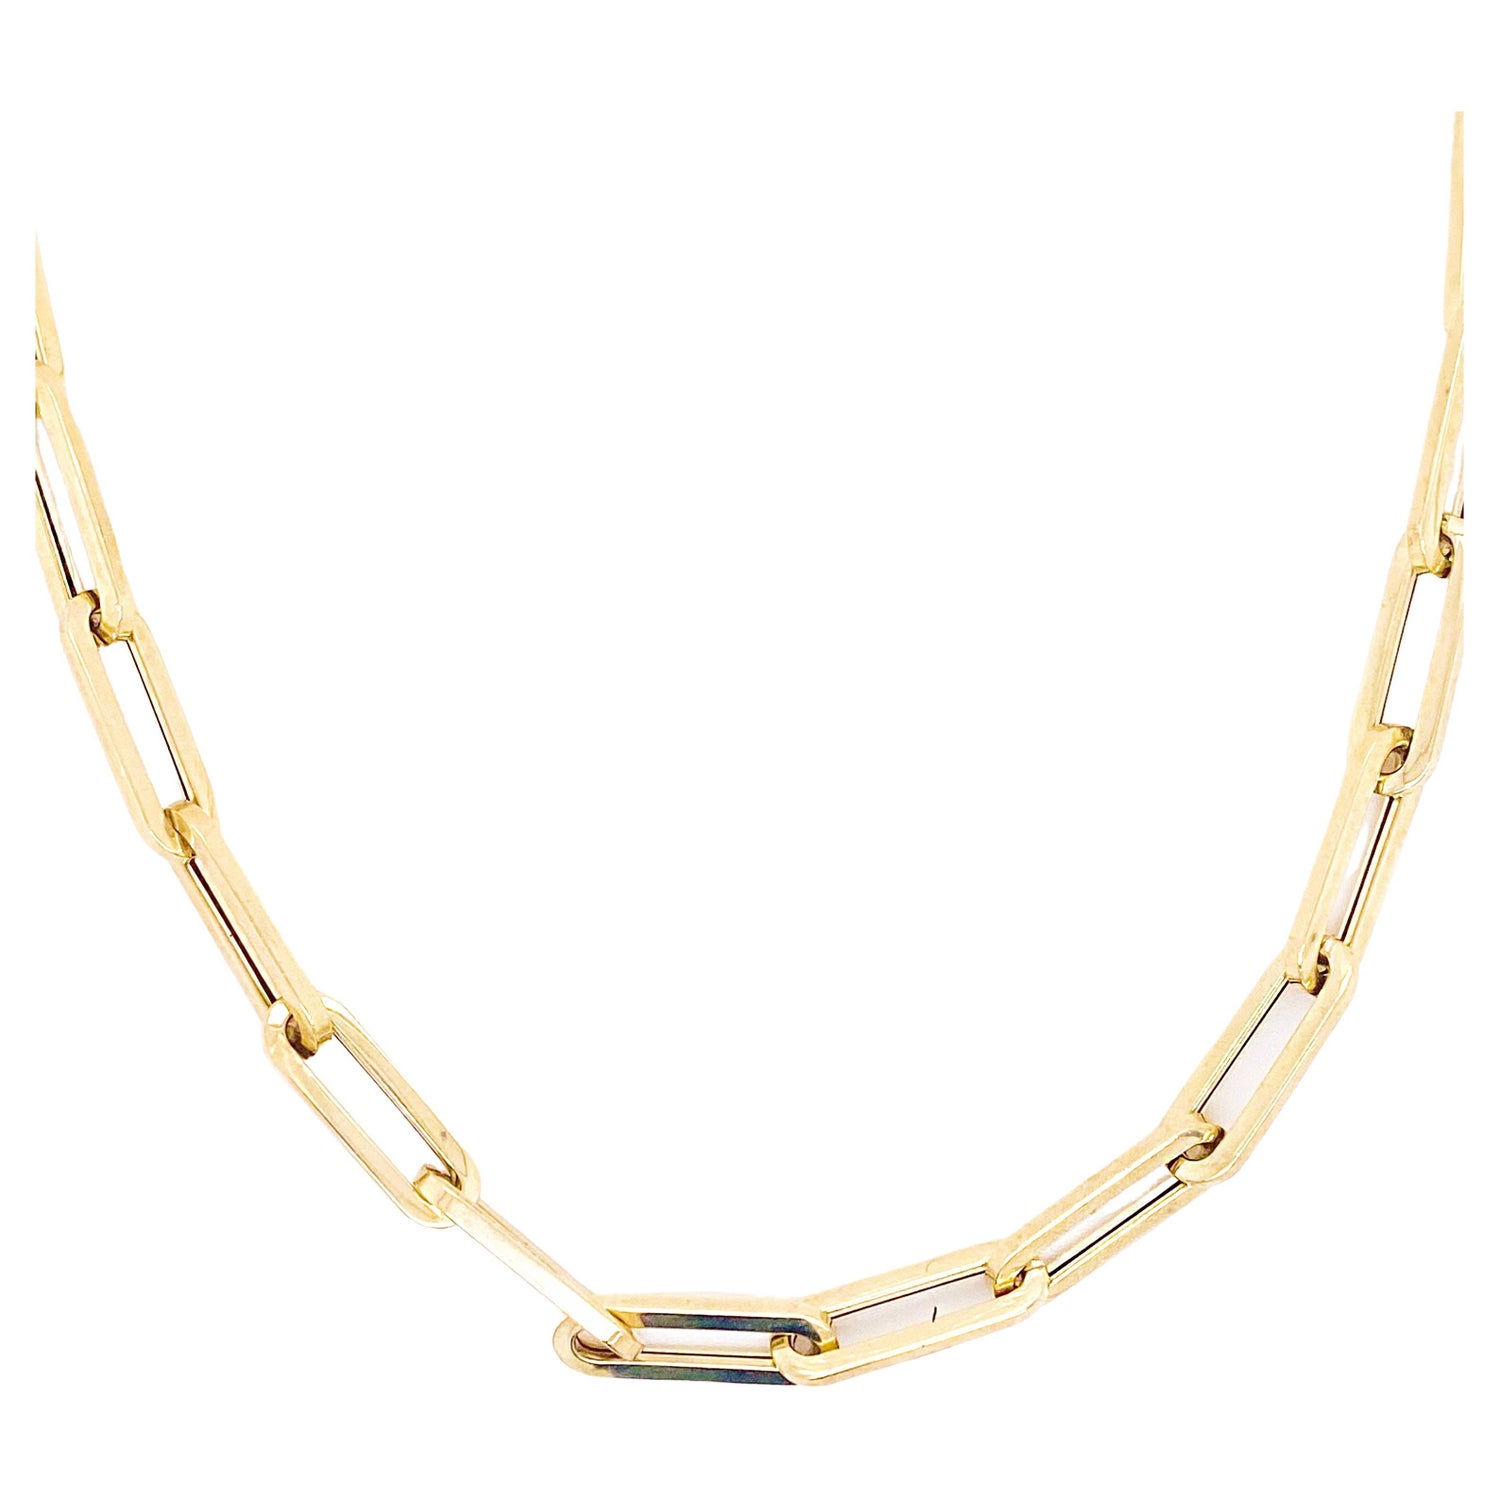 Gold Paper Chain 14k Flat Link - 6 For Sale on 1stDibs | lant aur barbati  20 grame, lant barbati aur 14k